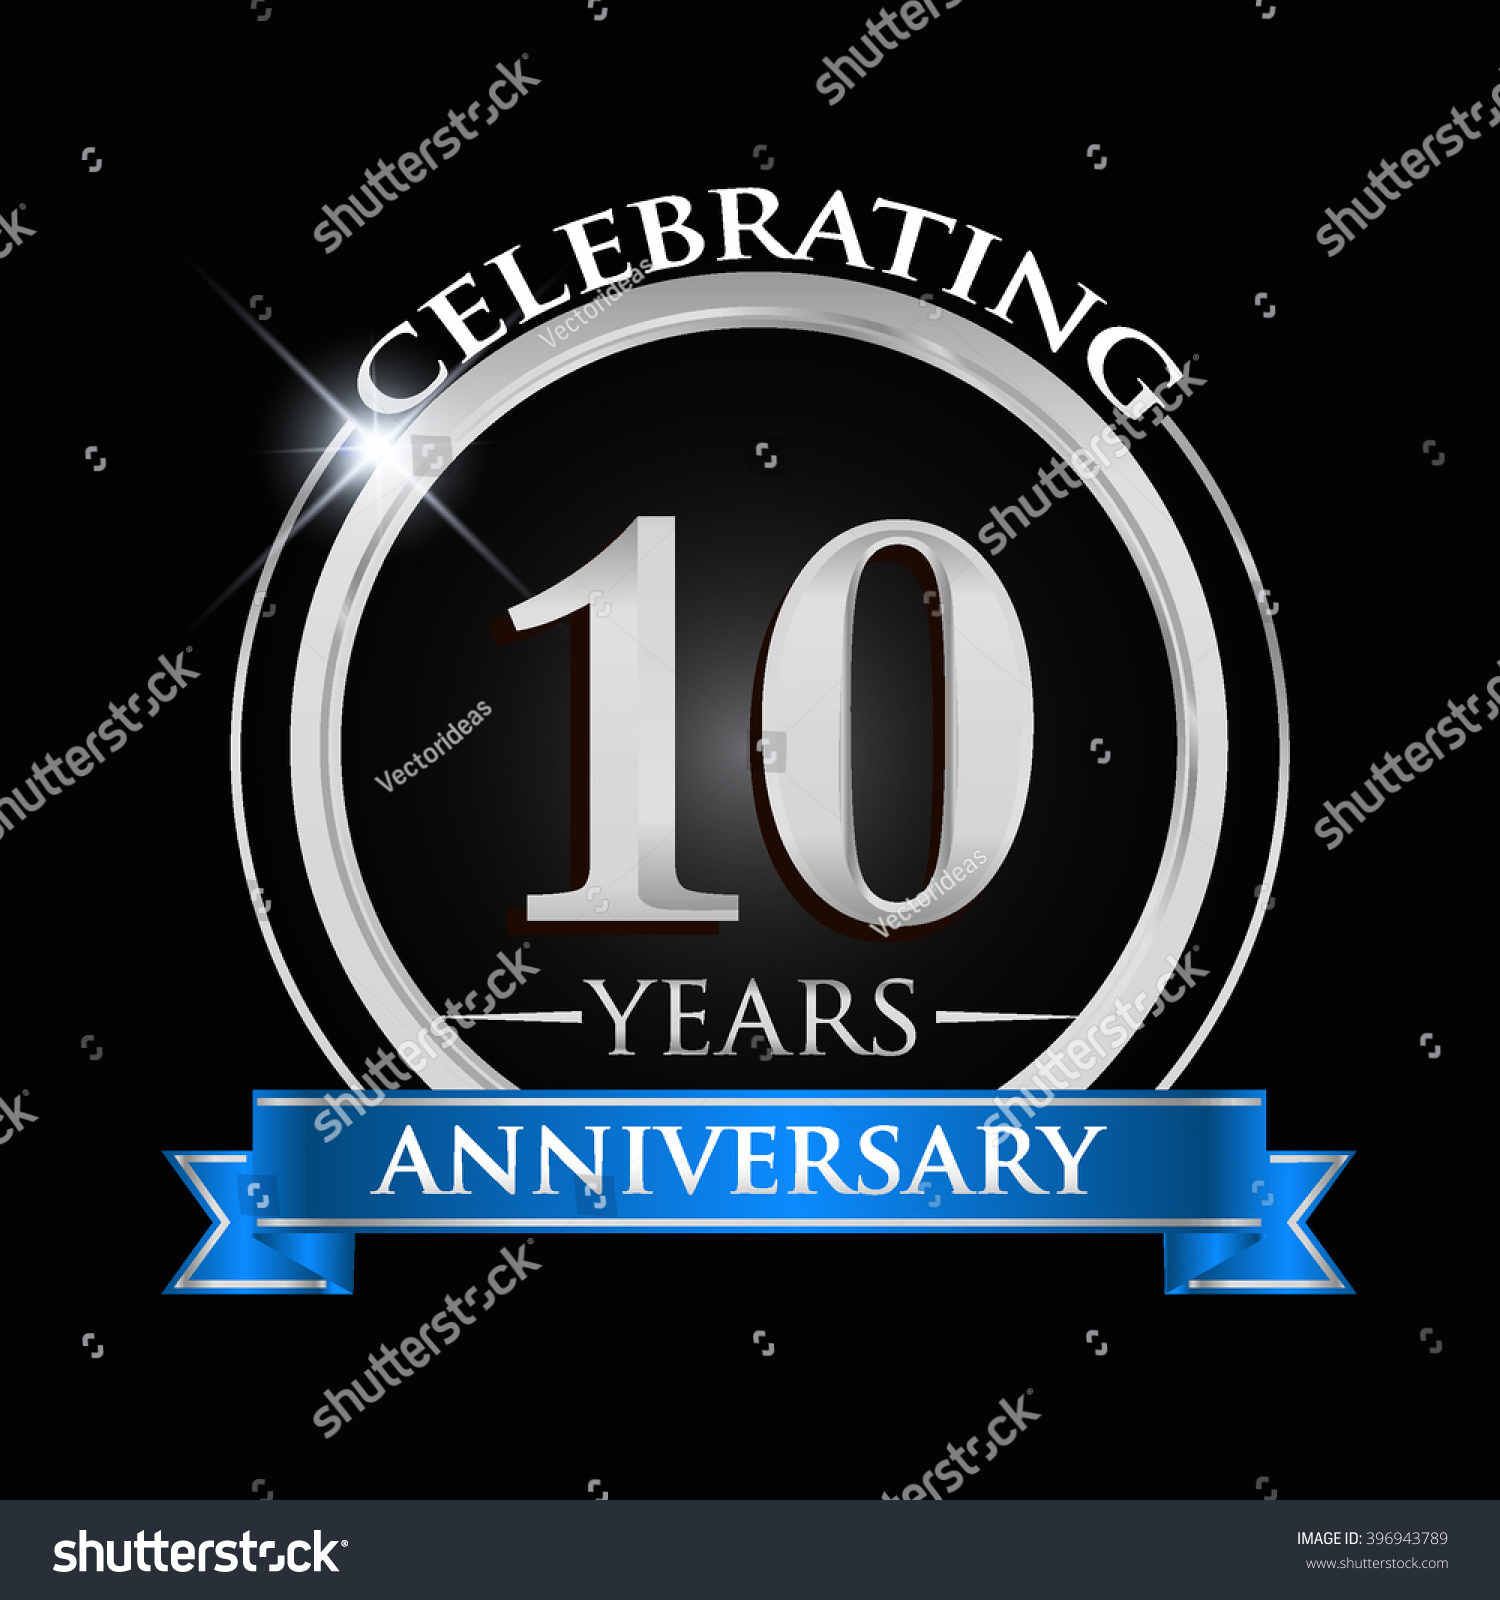 celebrating-10-years-anniversary-logo-silver